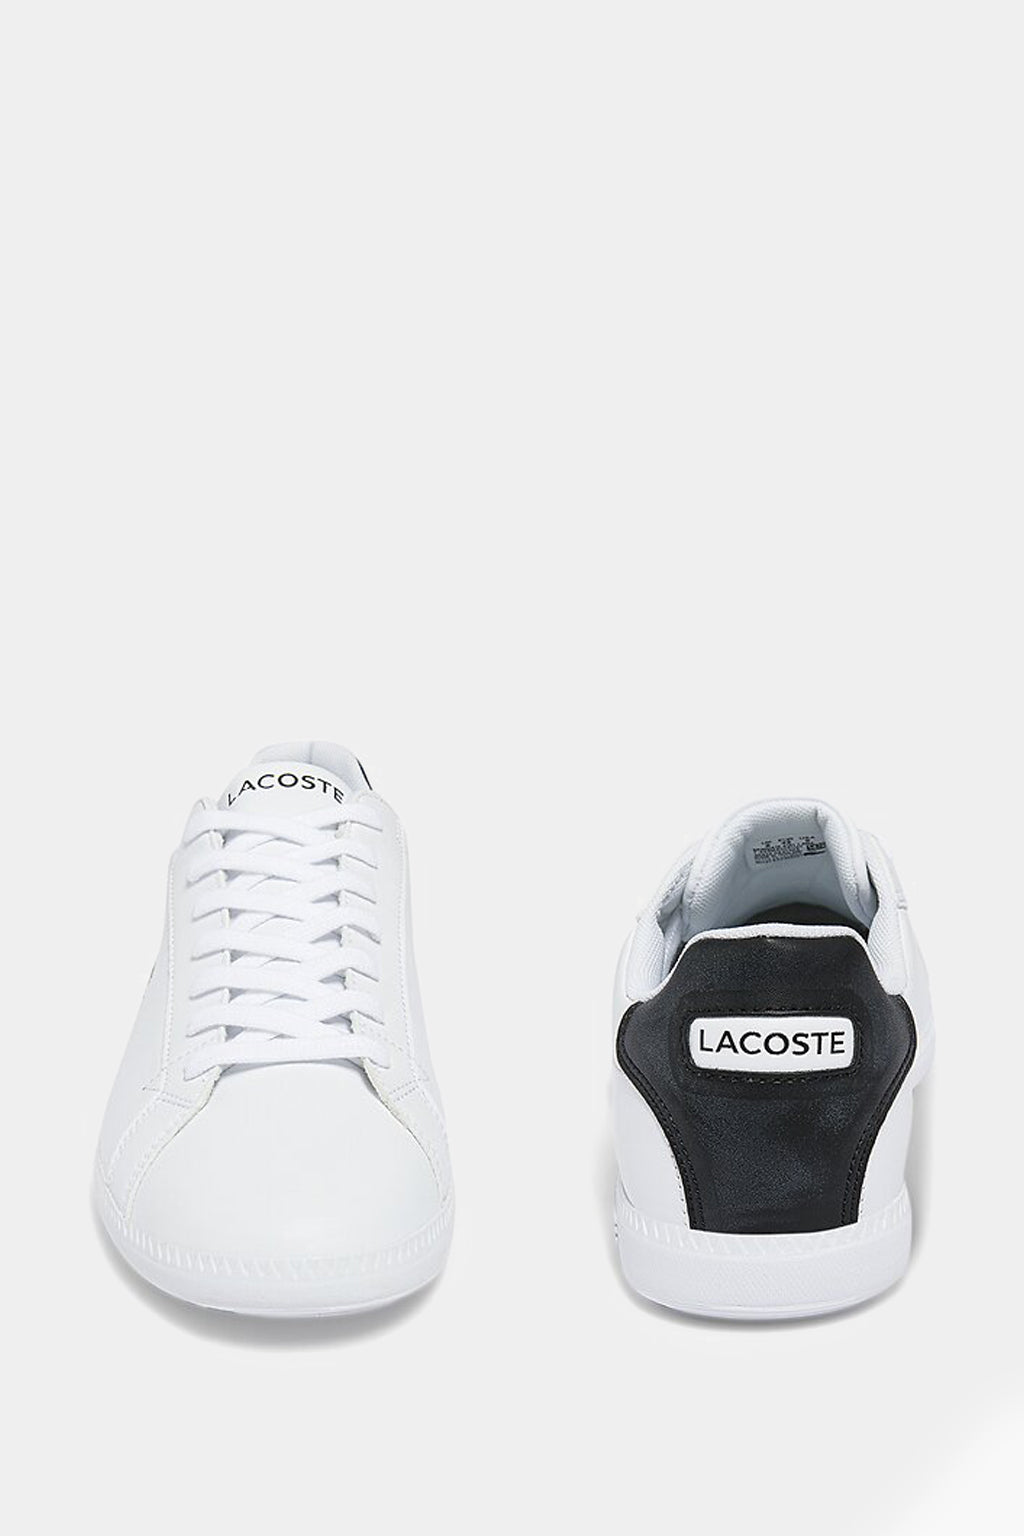 Lacoste - Men's Graduate Sneakers